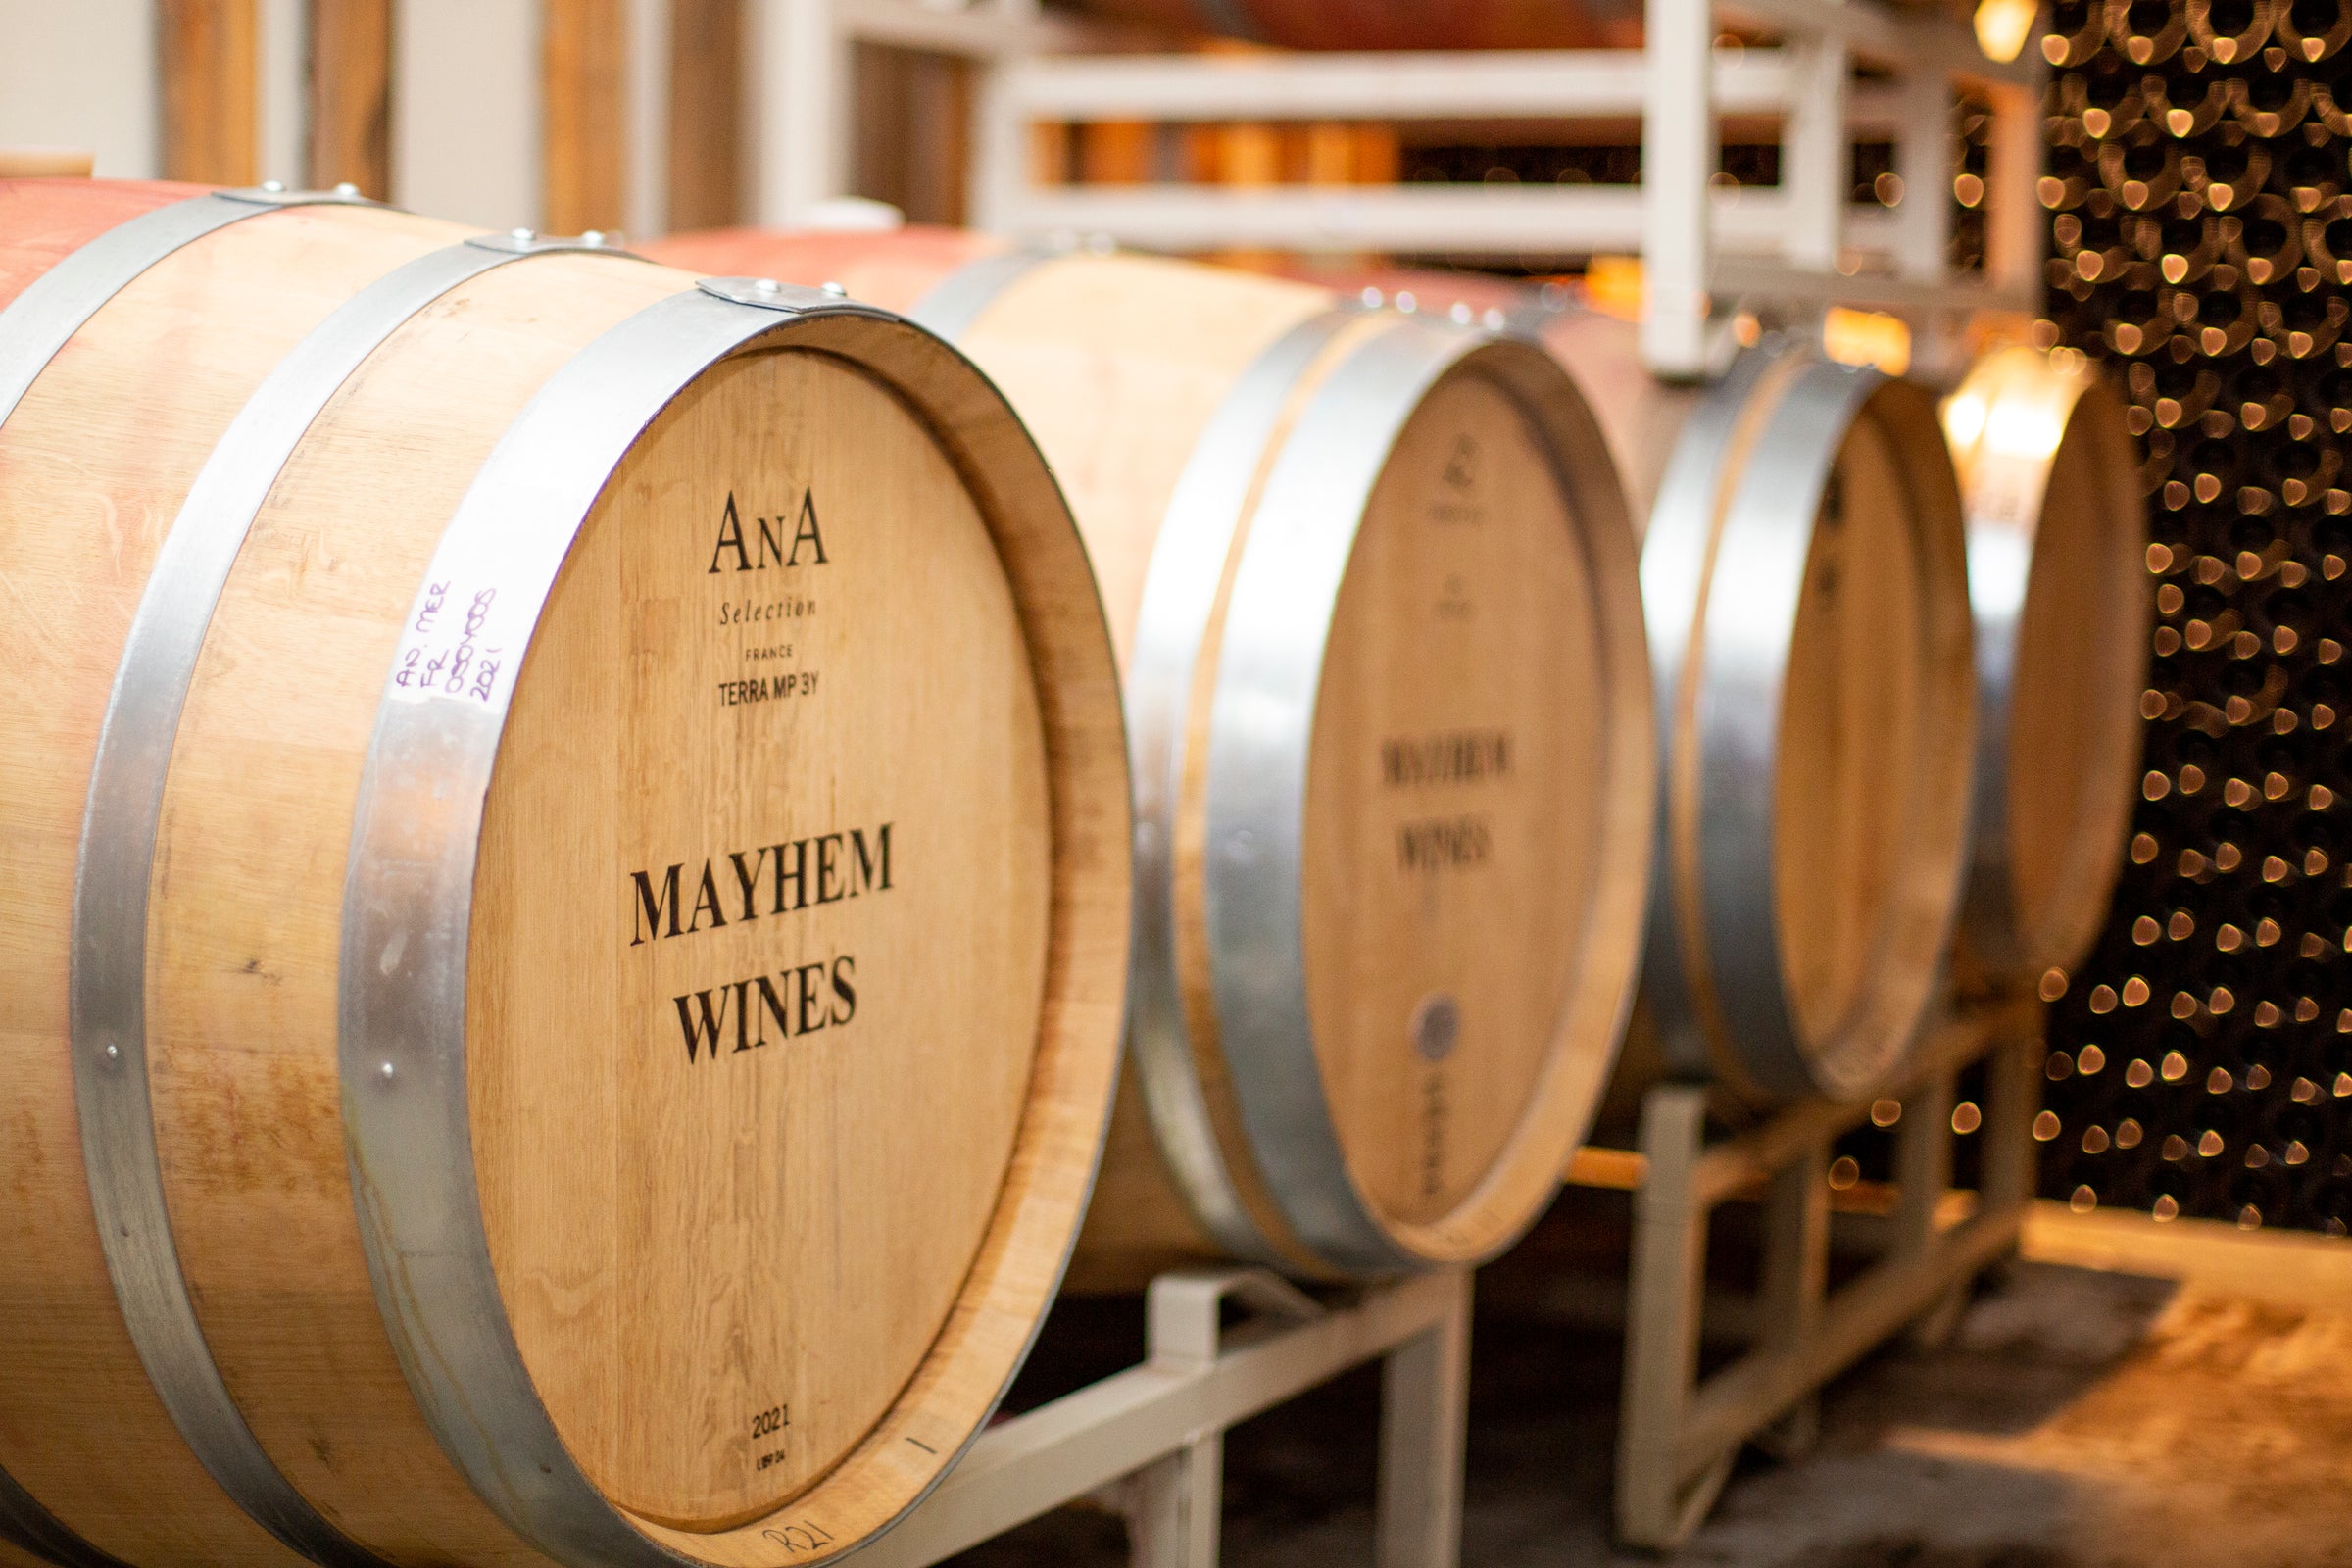 Mayhem wine barrels in the cellar